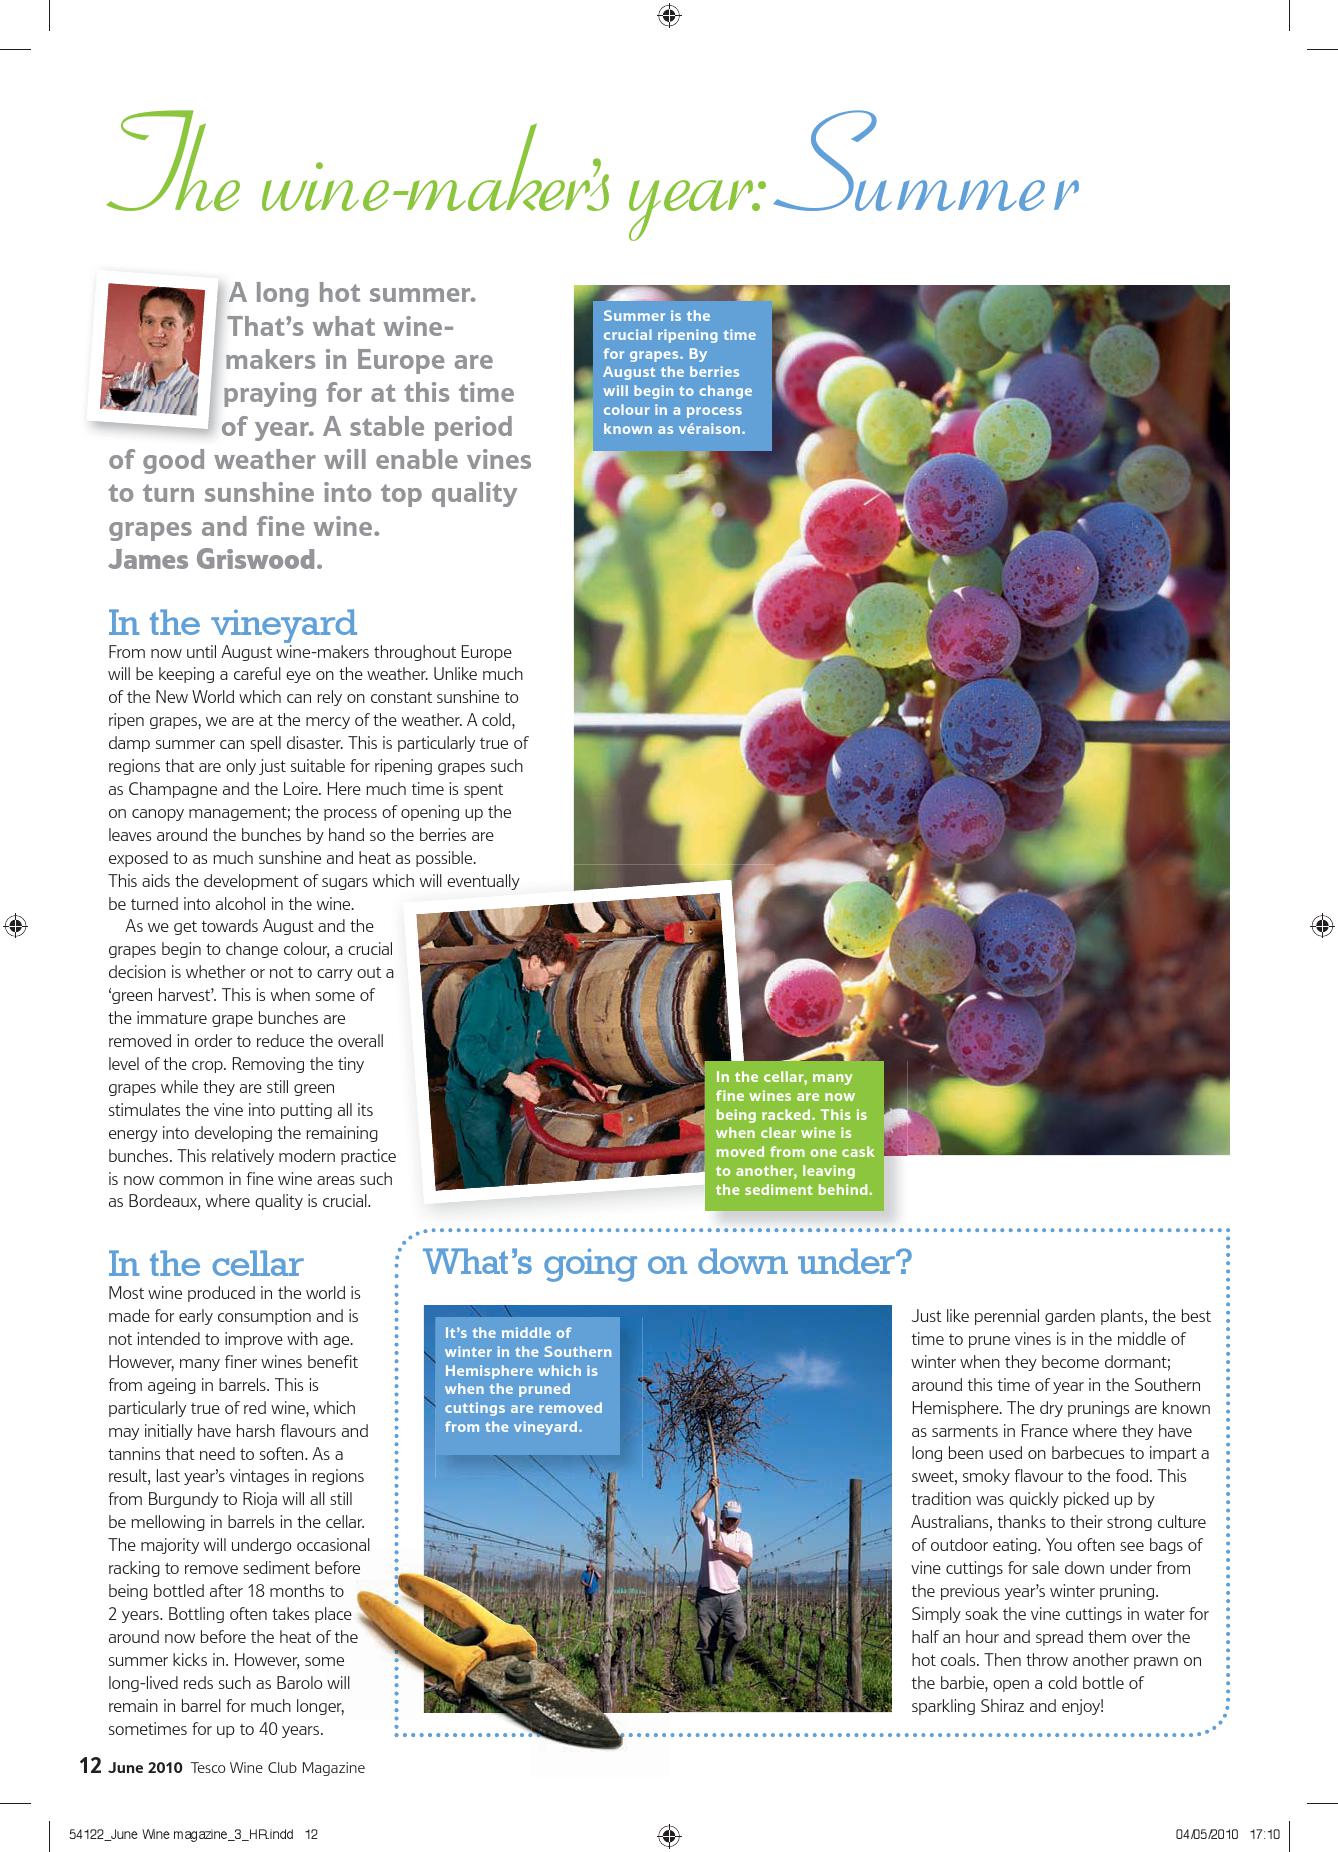 Wine magazine_LR proof_FINAL_ 07.05.10_000012.jpg